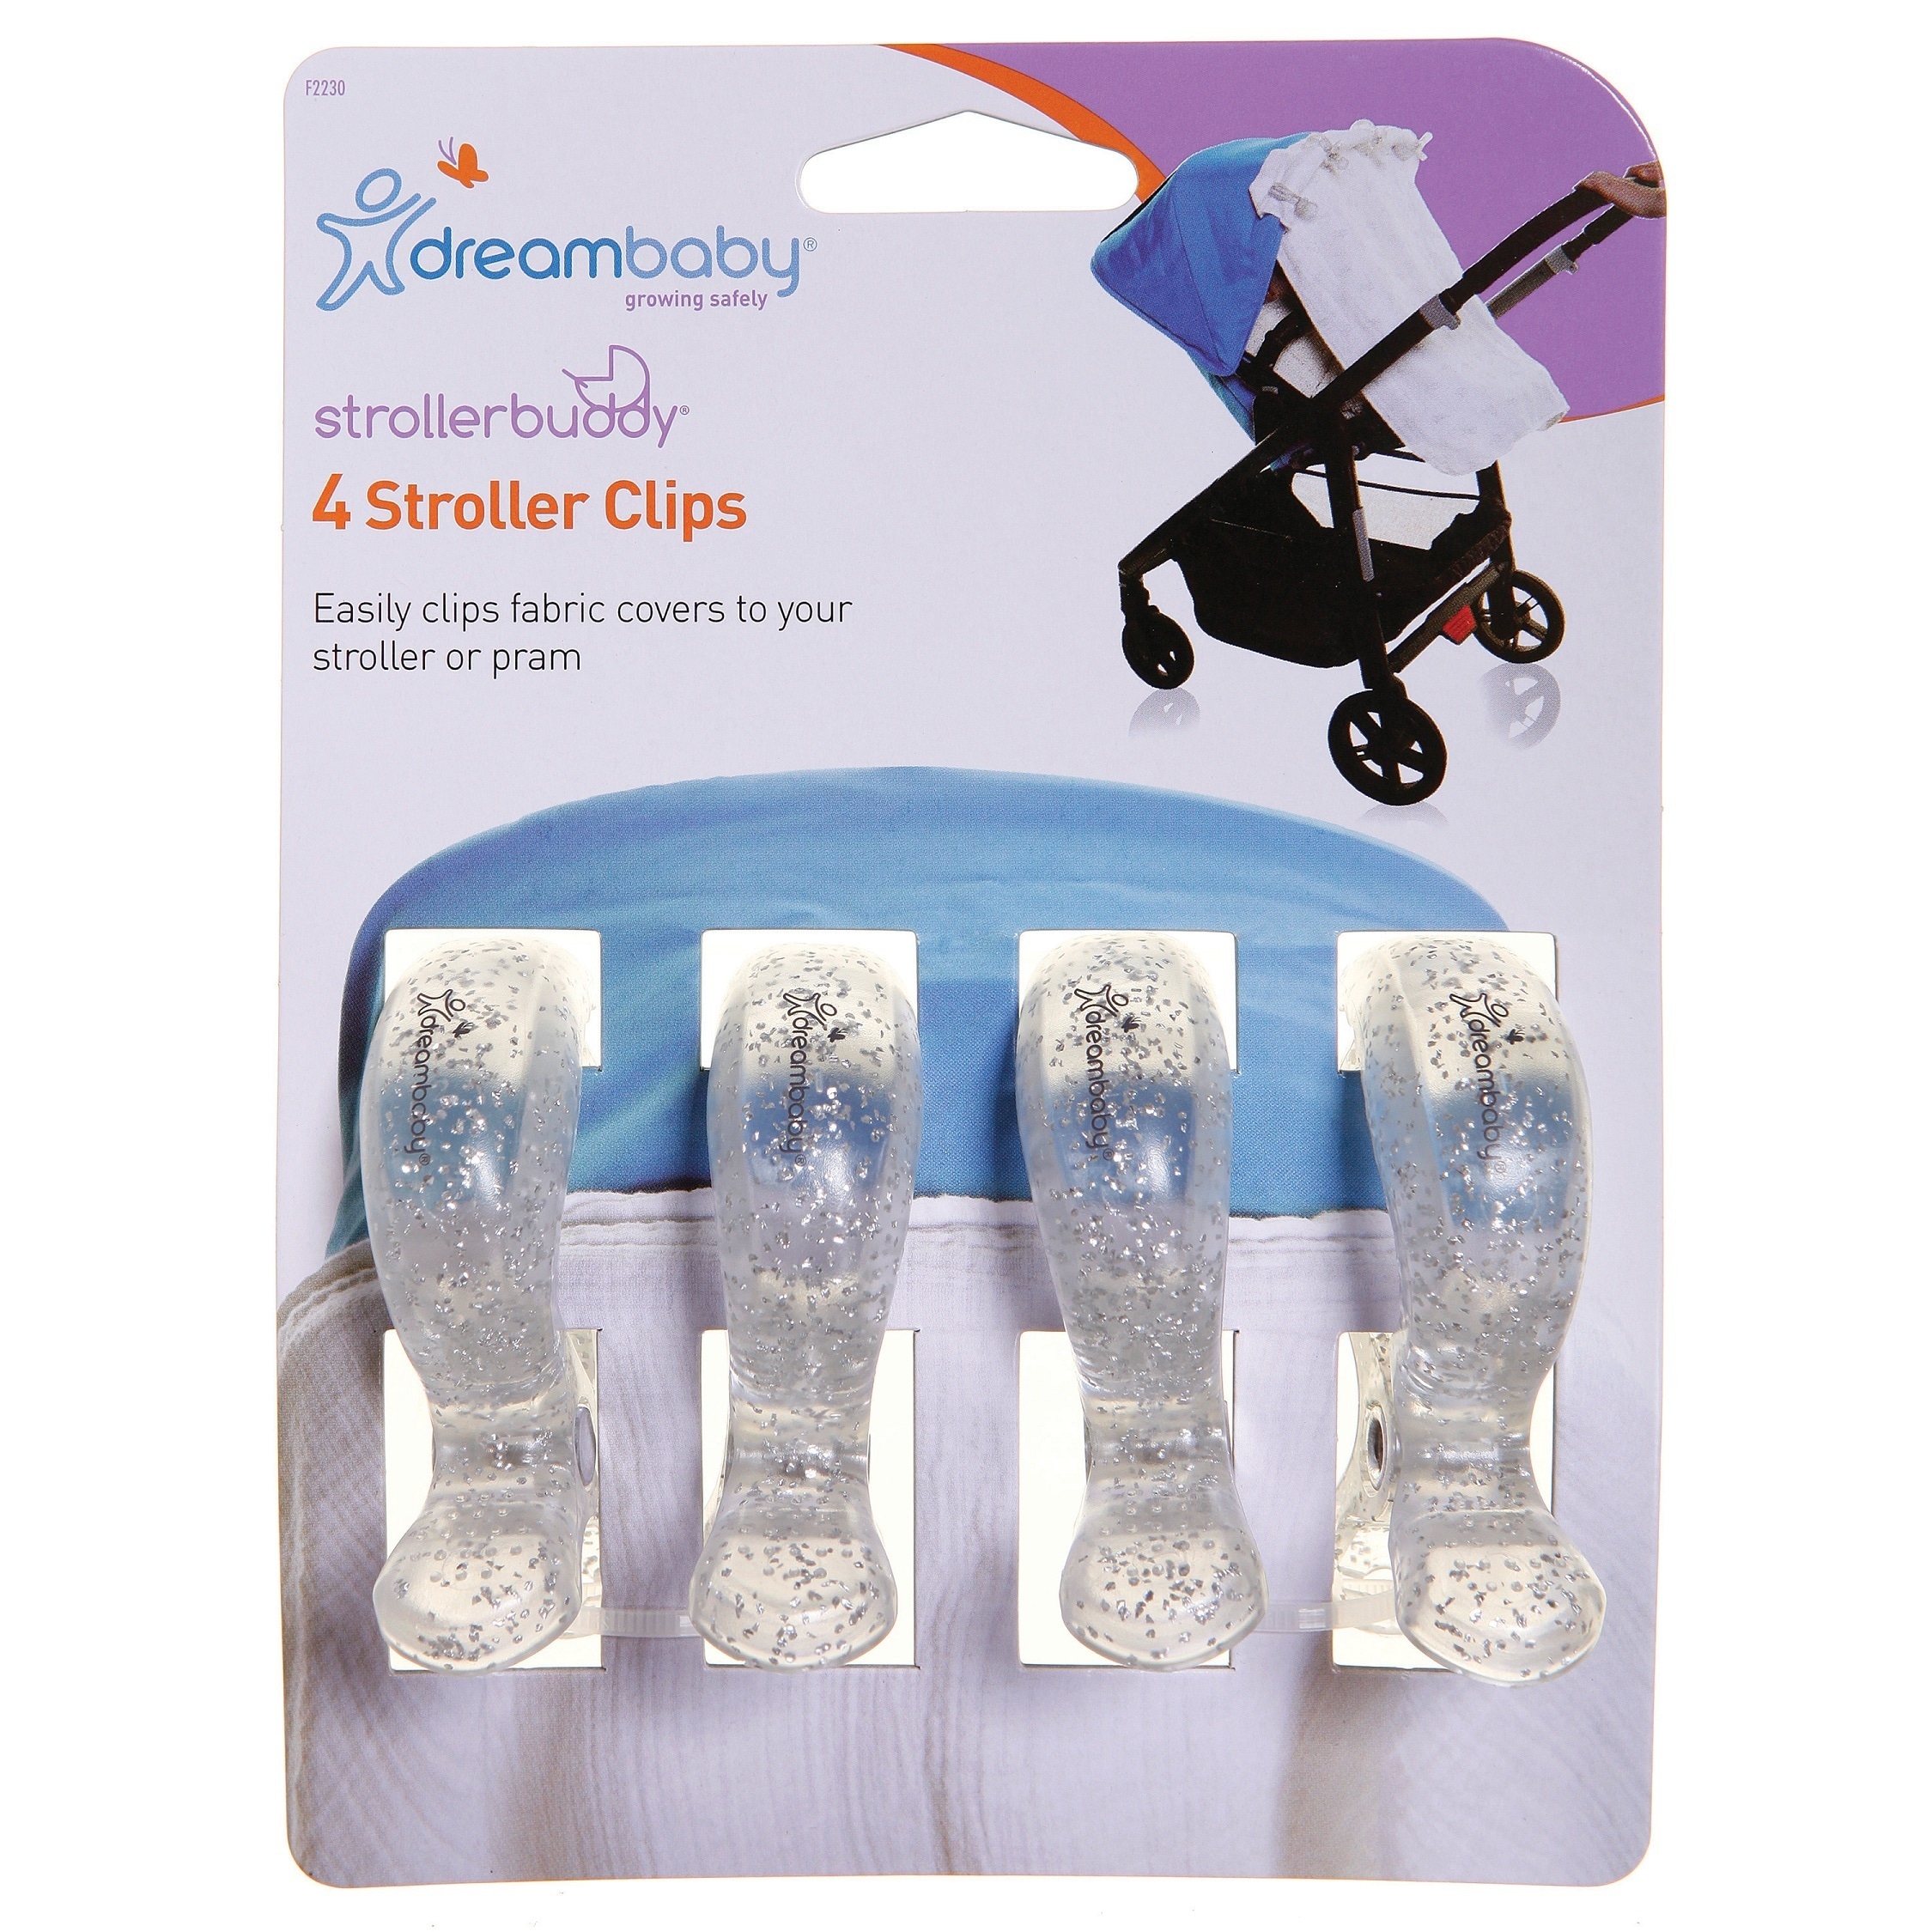 stroller blanket clips